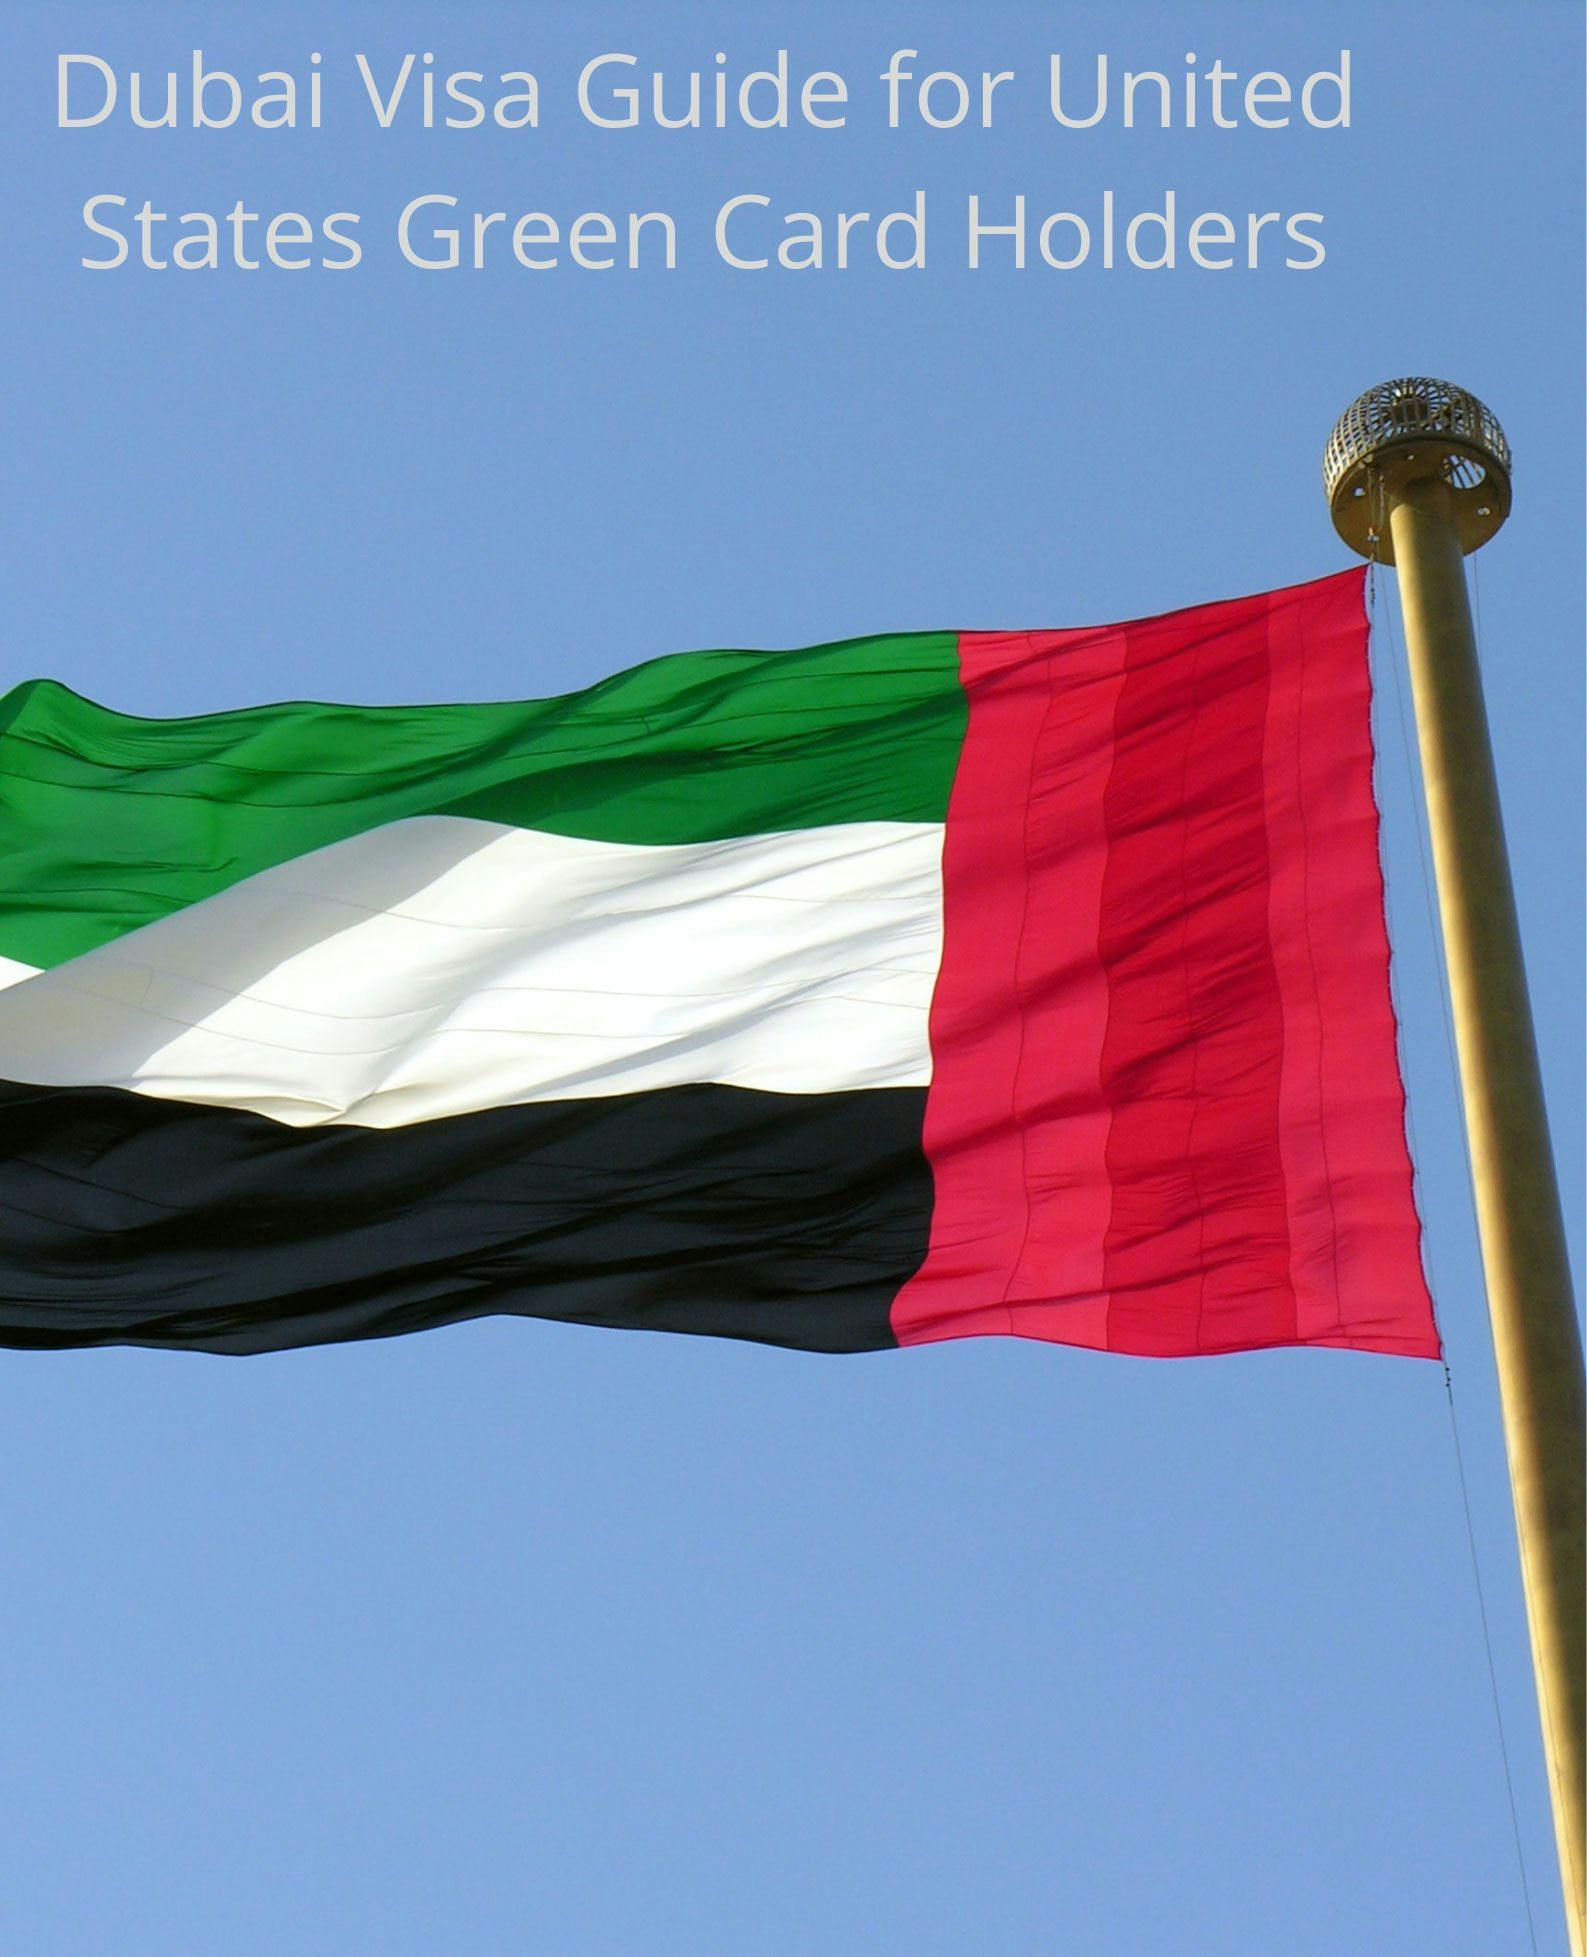 Dubai Visa Guide for United States Green Card Holders